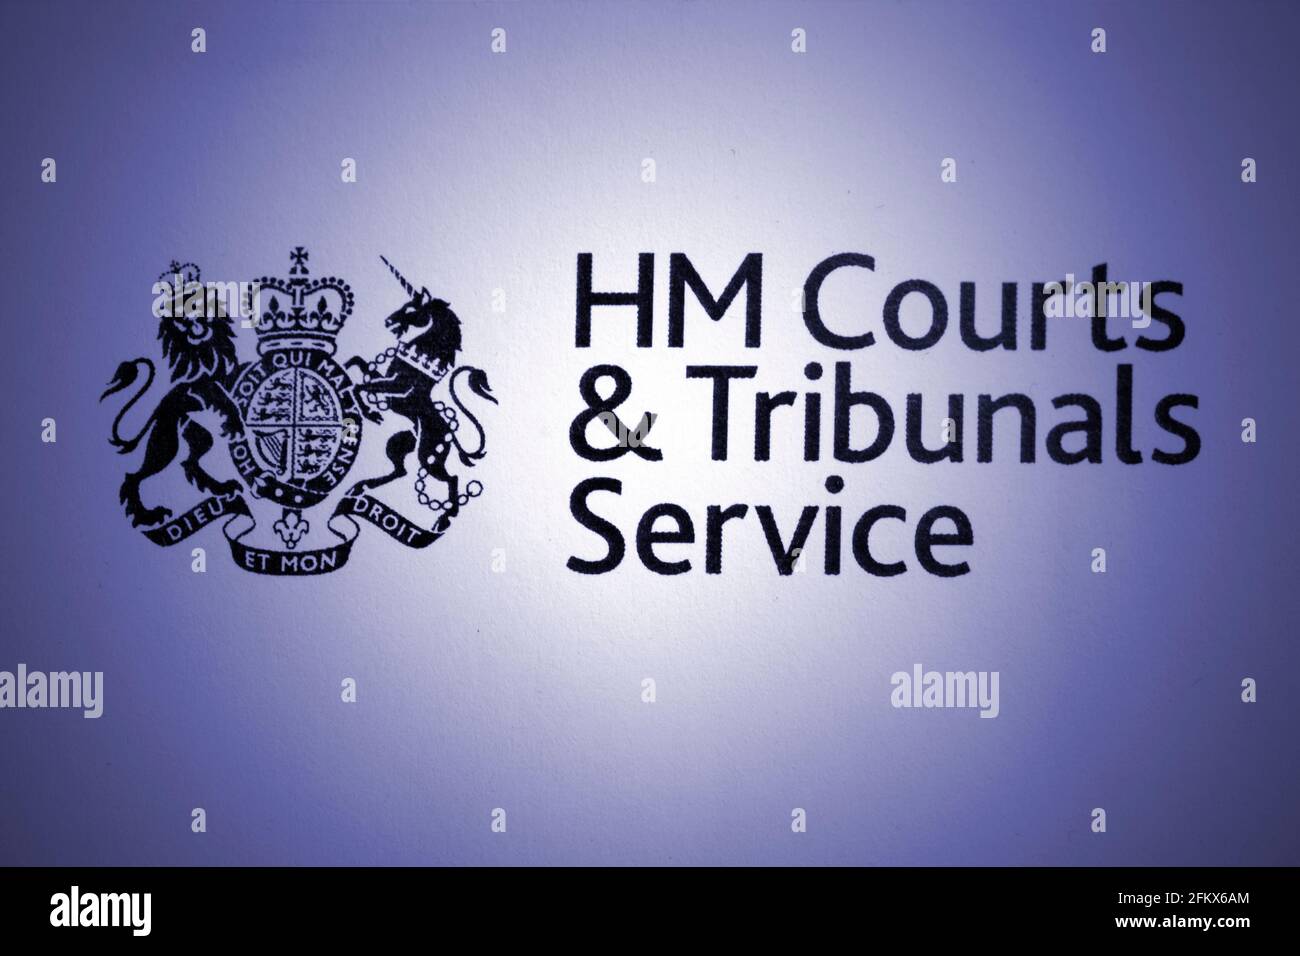 HM Courts & Tribunals Service logo Stock Photo